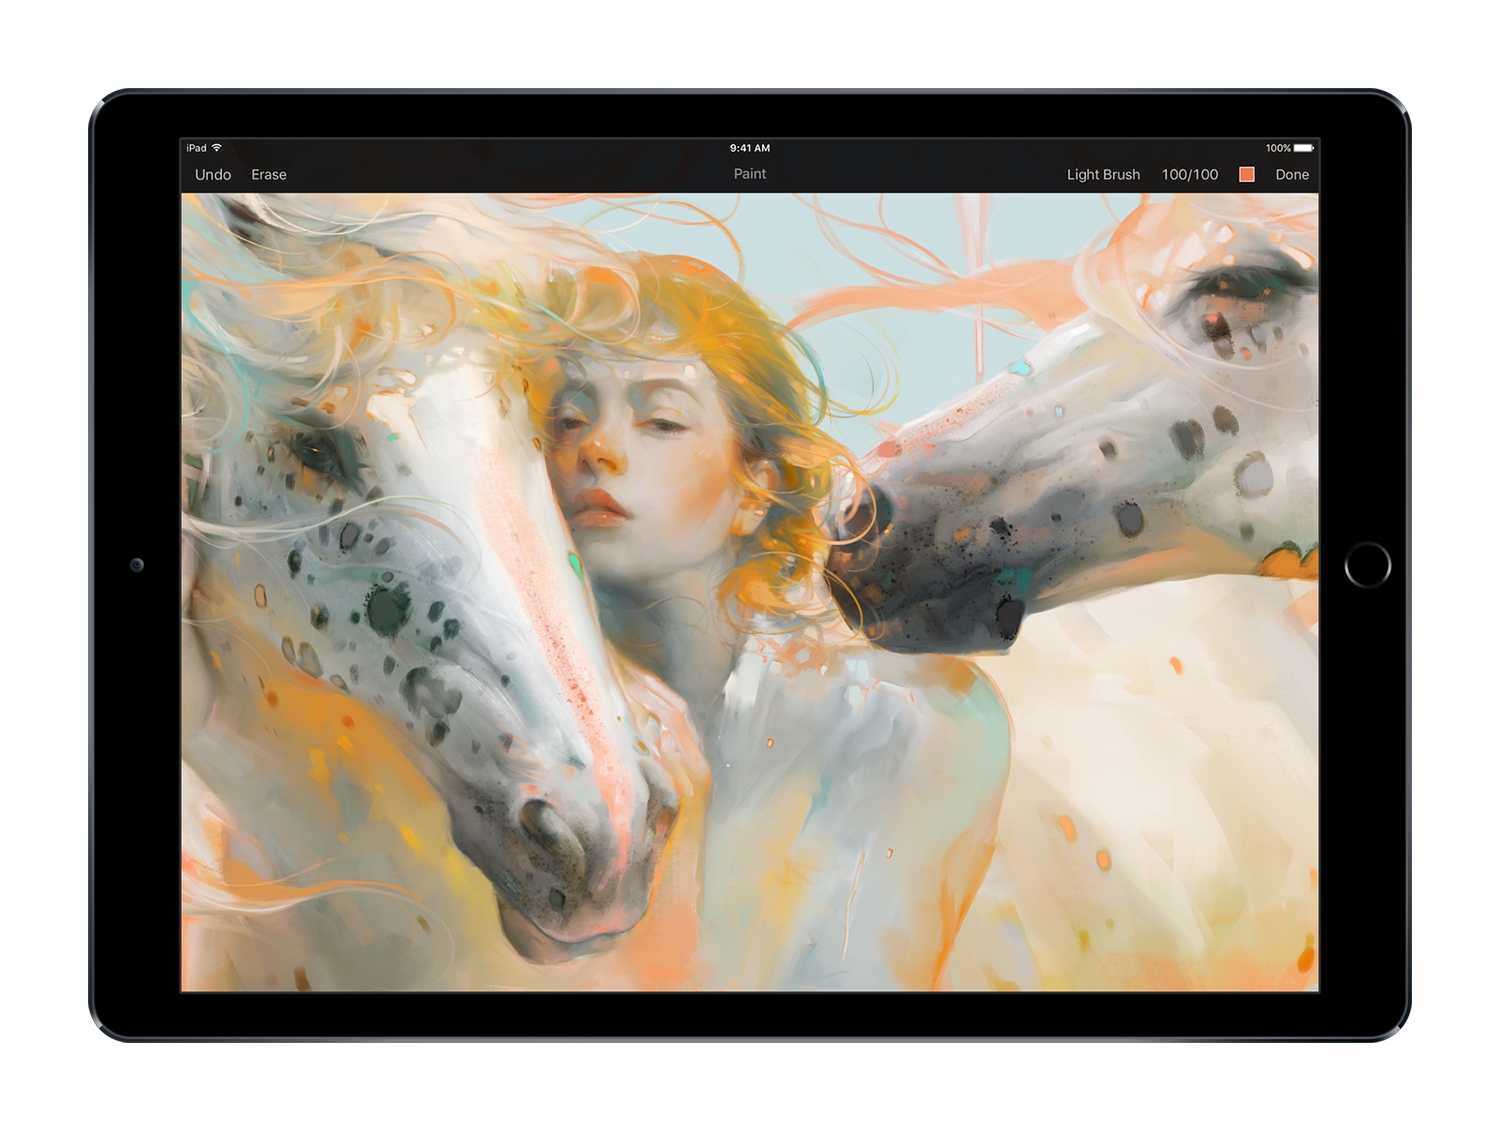 15-ung-dung-hoi-hoa-tot-nhat-danh-cho-iPad-13